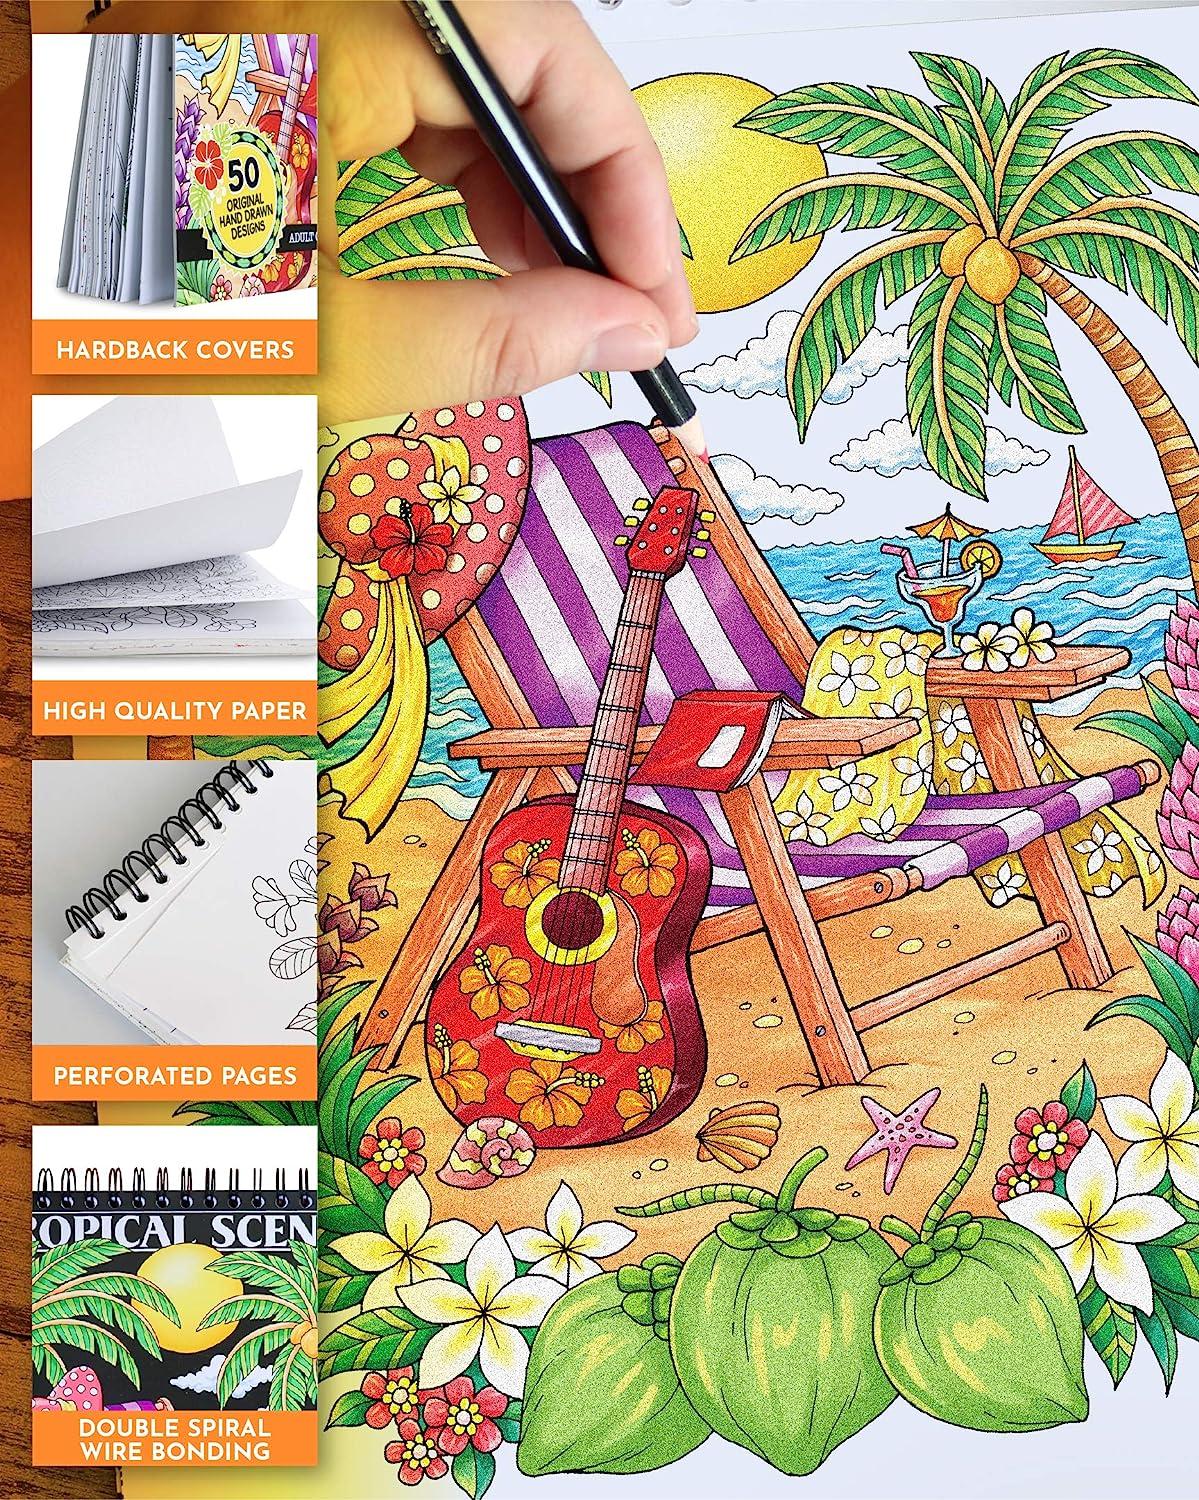 Adult Coloring Books - Hardback Covers, Spiral Binding